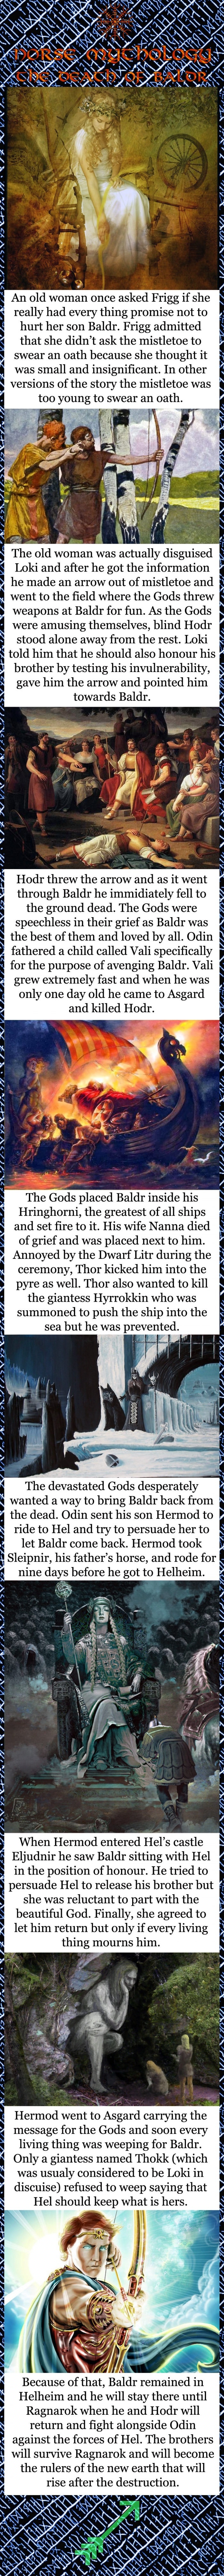 Norse mythology - The death of Baldr